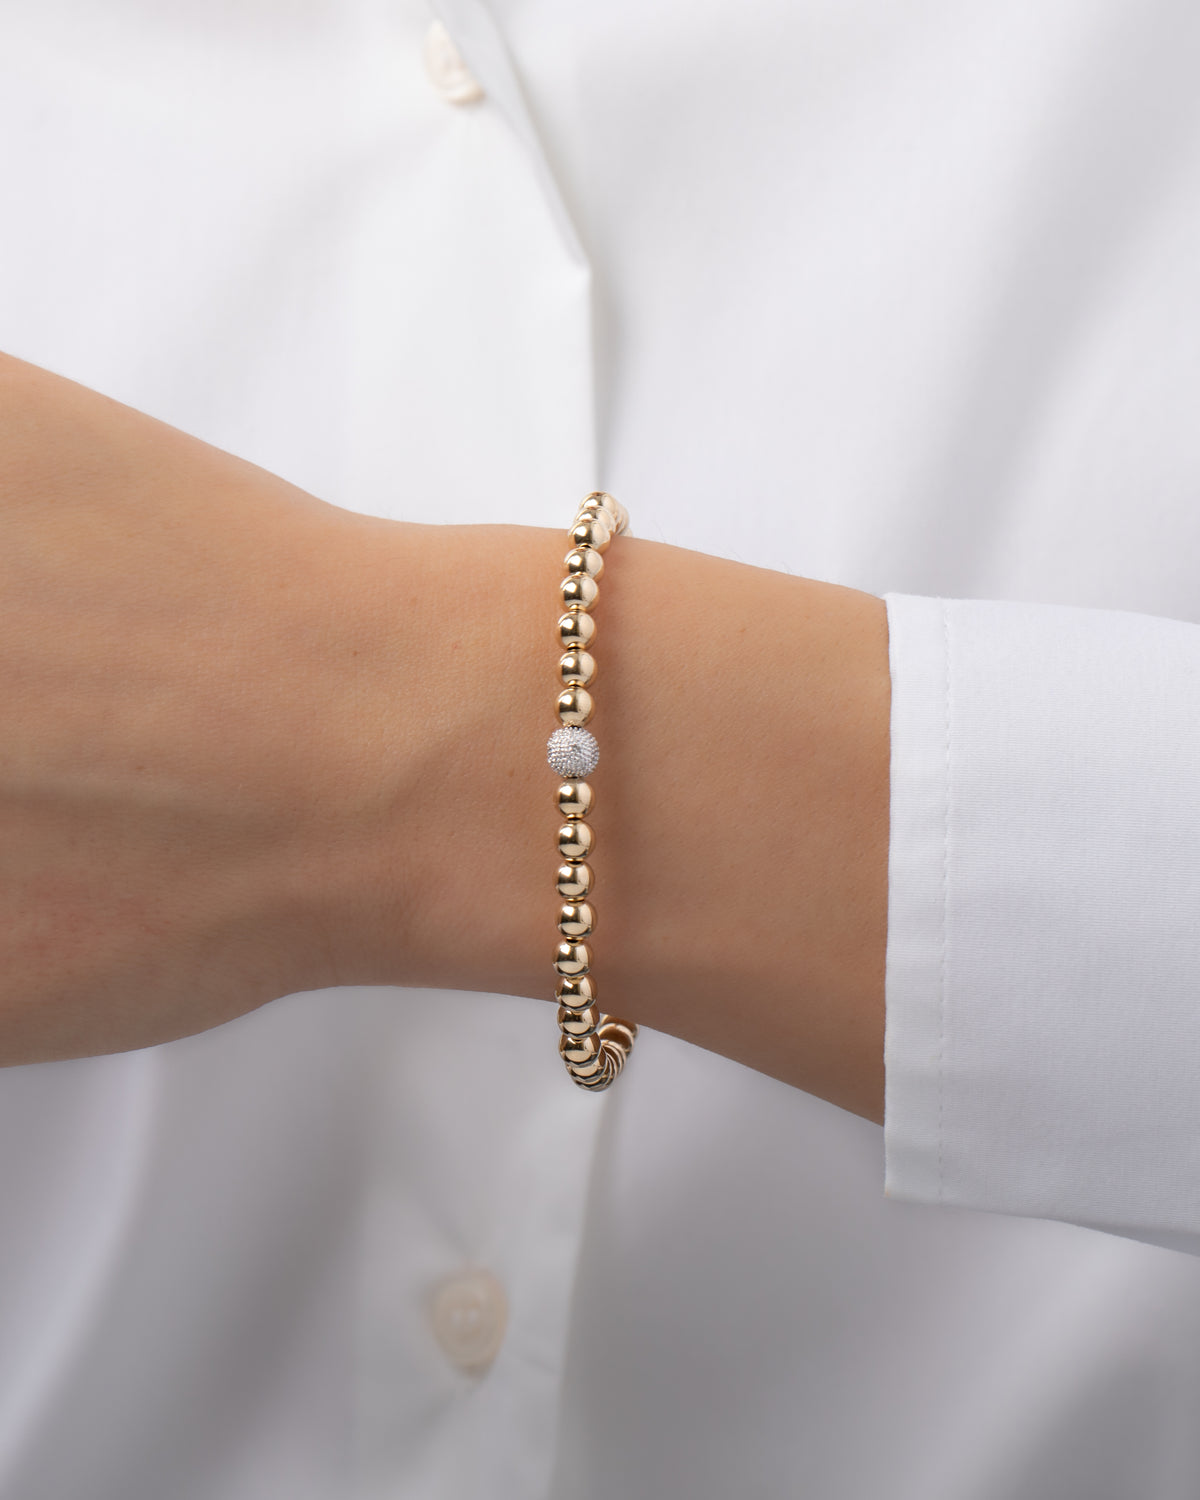 5mm Gold Bead Bracelet with Diamond Bead